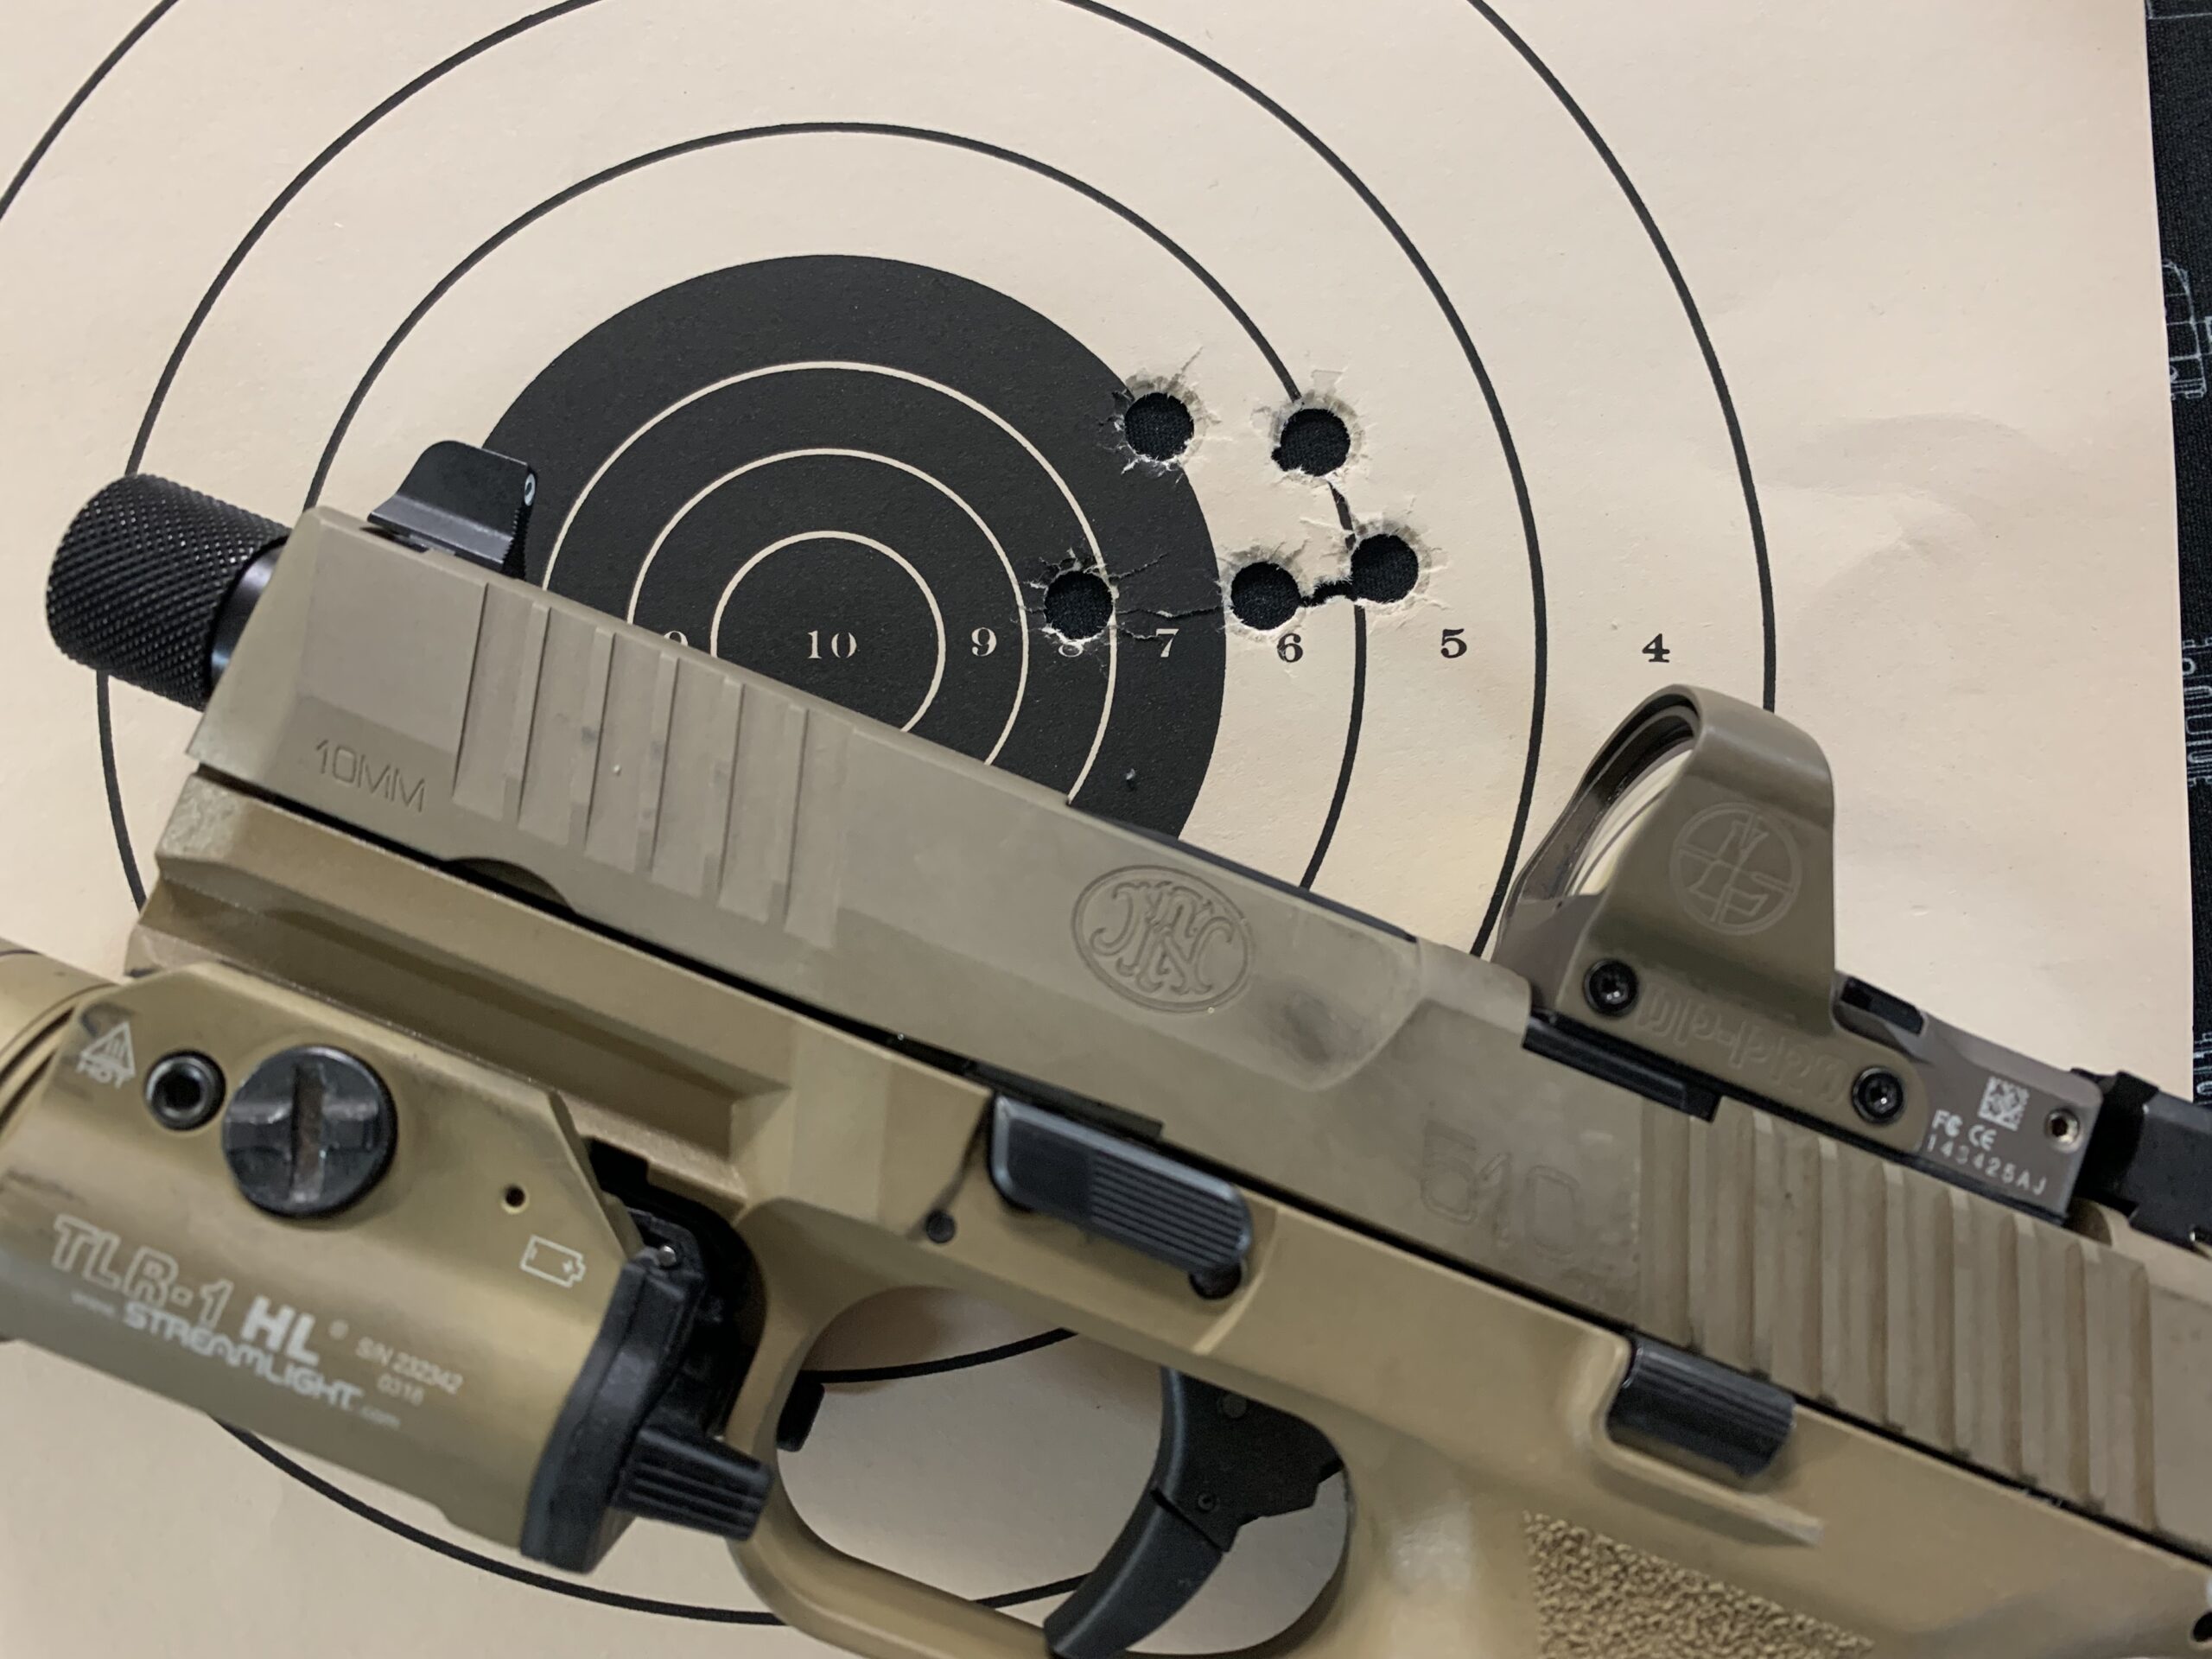 FN 510 accuracy